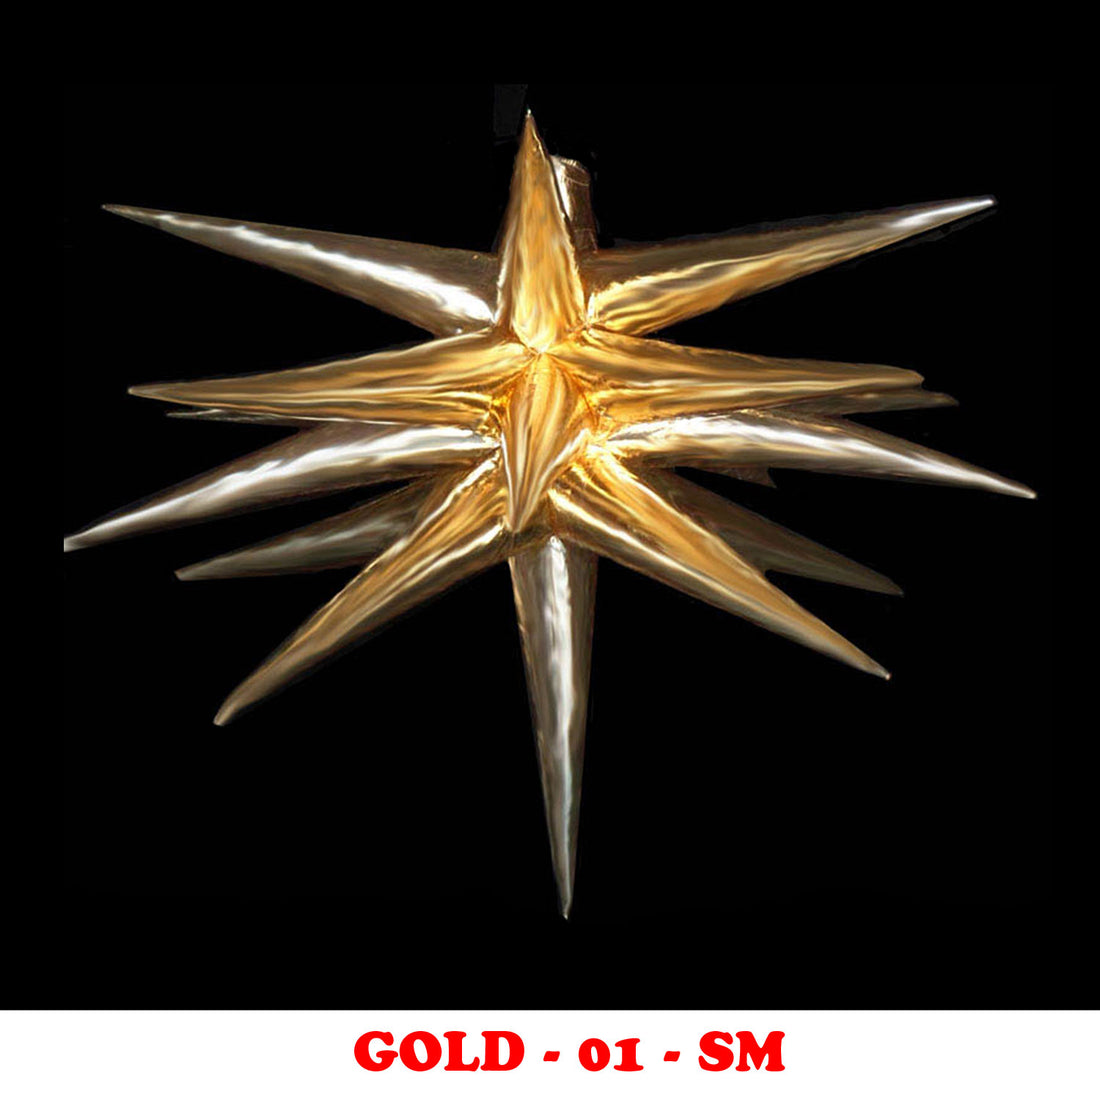 GOLD - 01 - SM